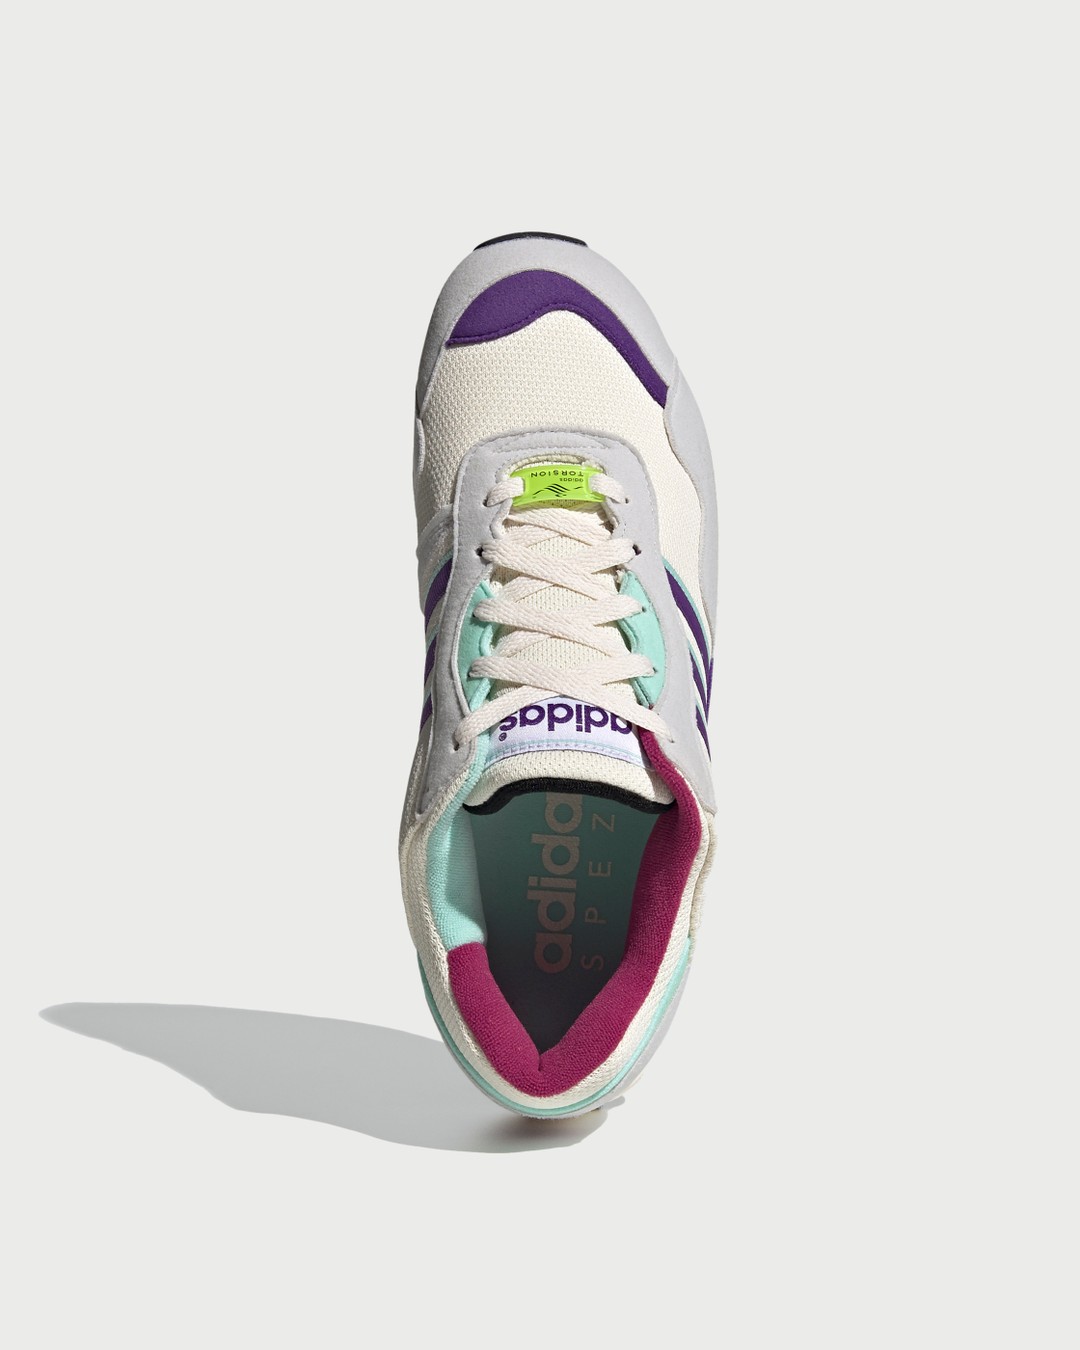 Adidas – HRMNY Spezial Multi - Low Top Sneakers - Multi - Image 3